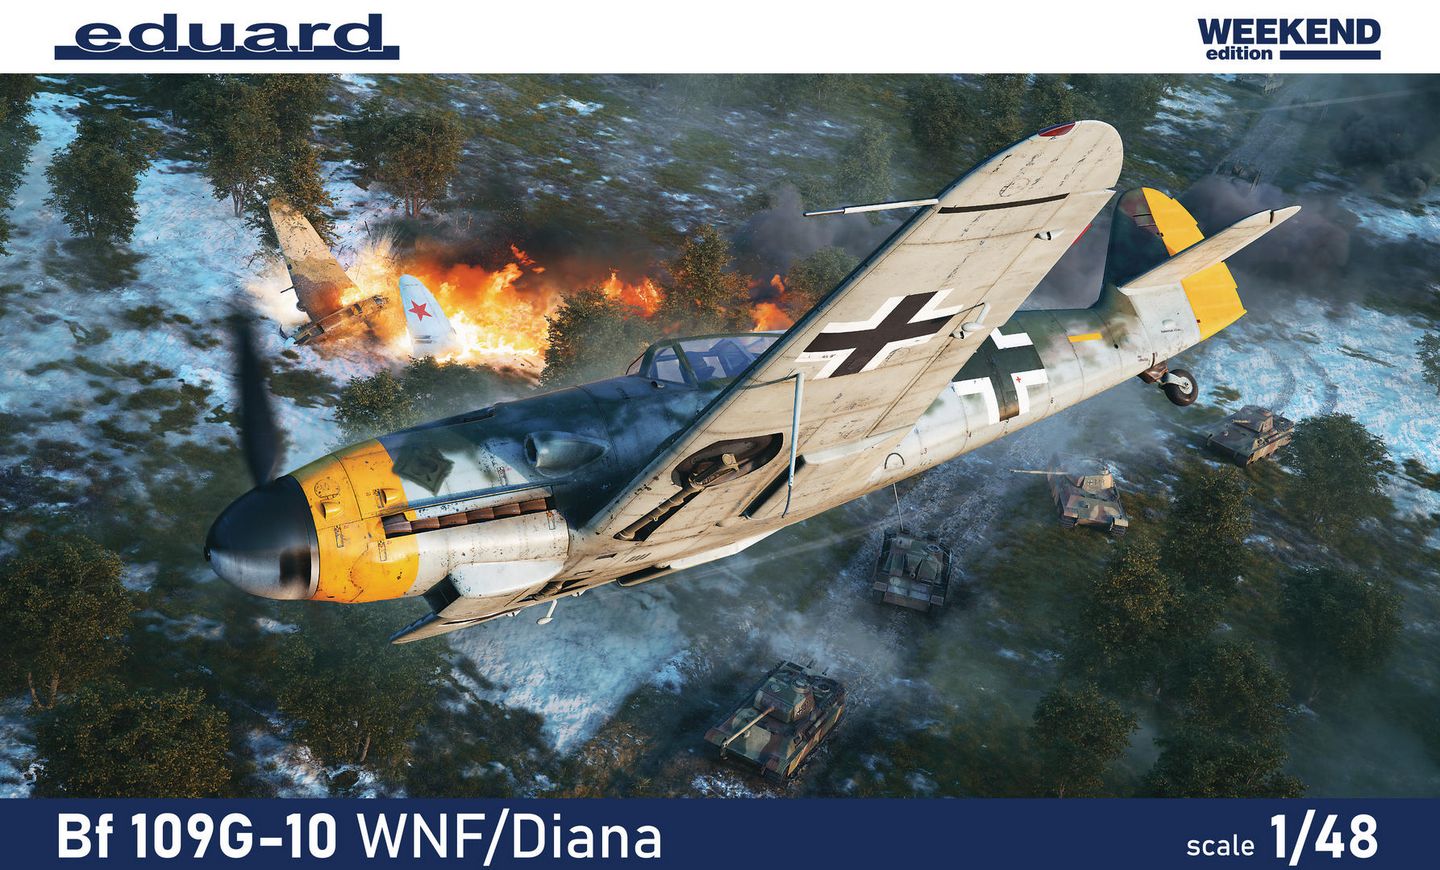 Bf 109G-10 WNF/Diana - Weekend Edition - EDUARD 1/48